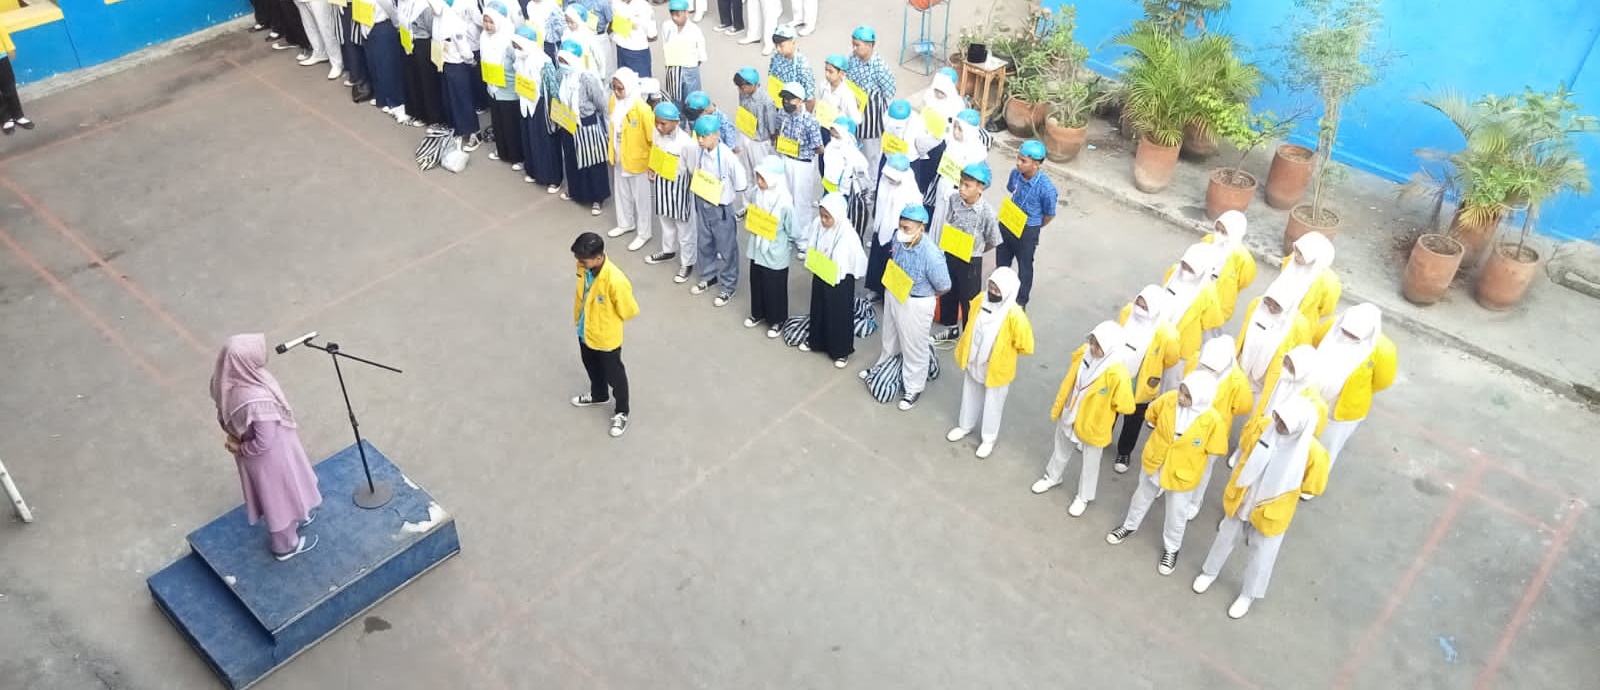 SMK DINAMIKA Cirebon Salah Satu Sekolah yang Sudah Menggunakan AKADEMIK